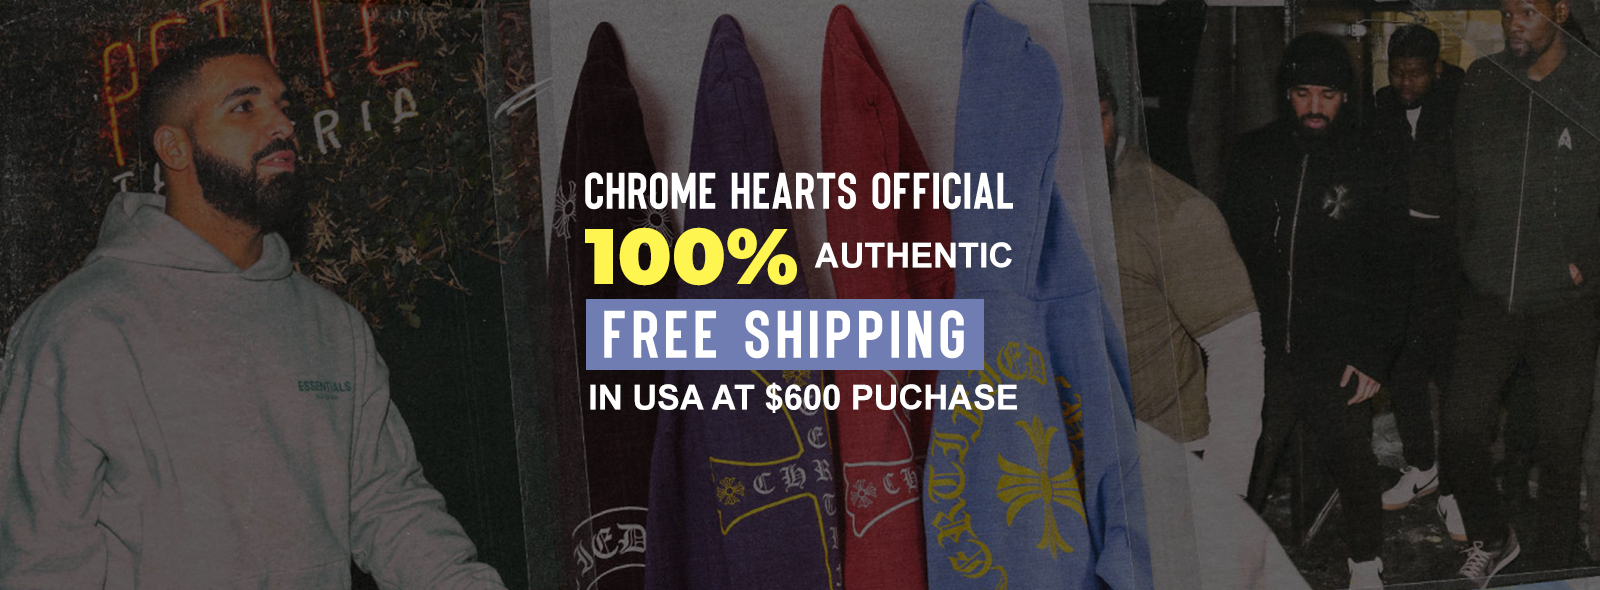 Chrome Hearts Clothing